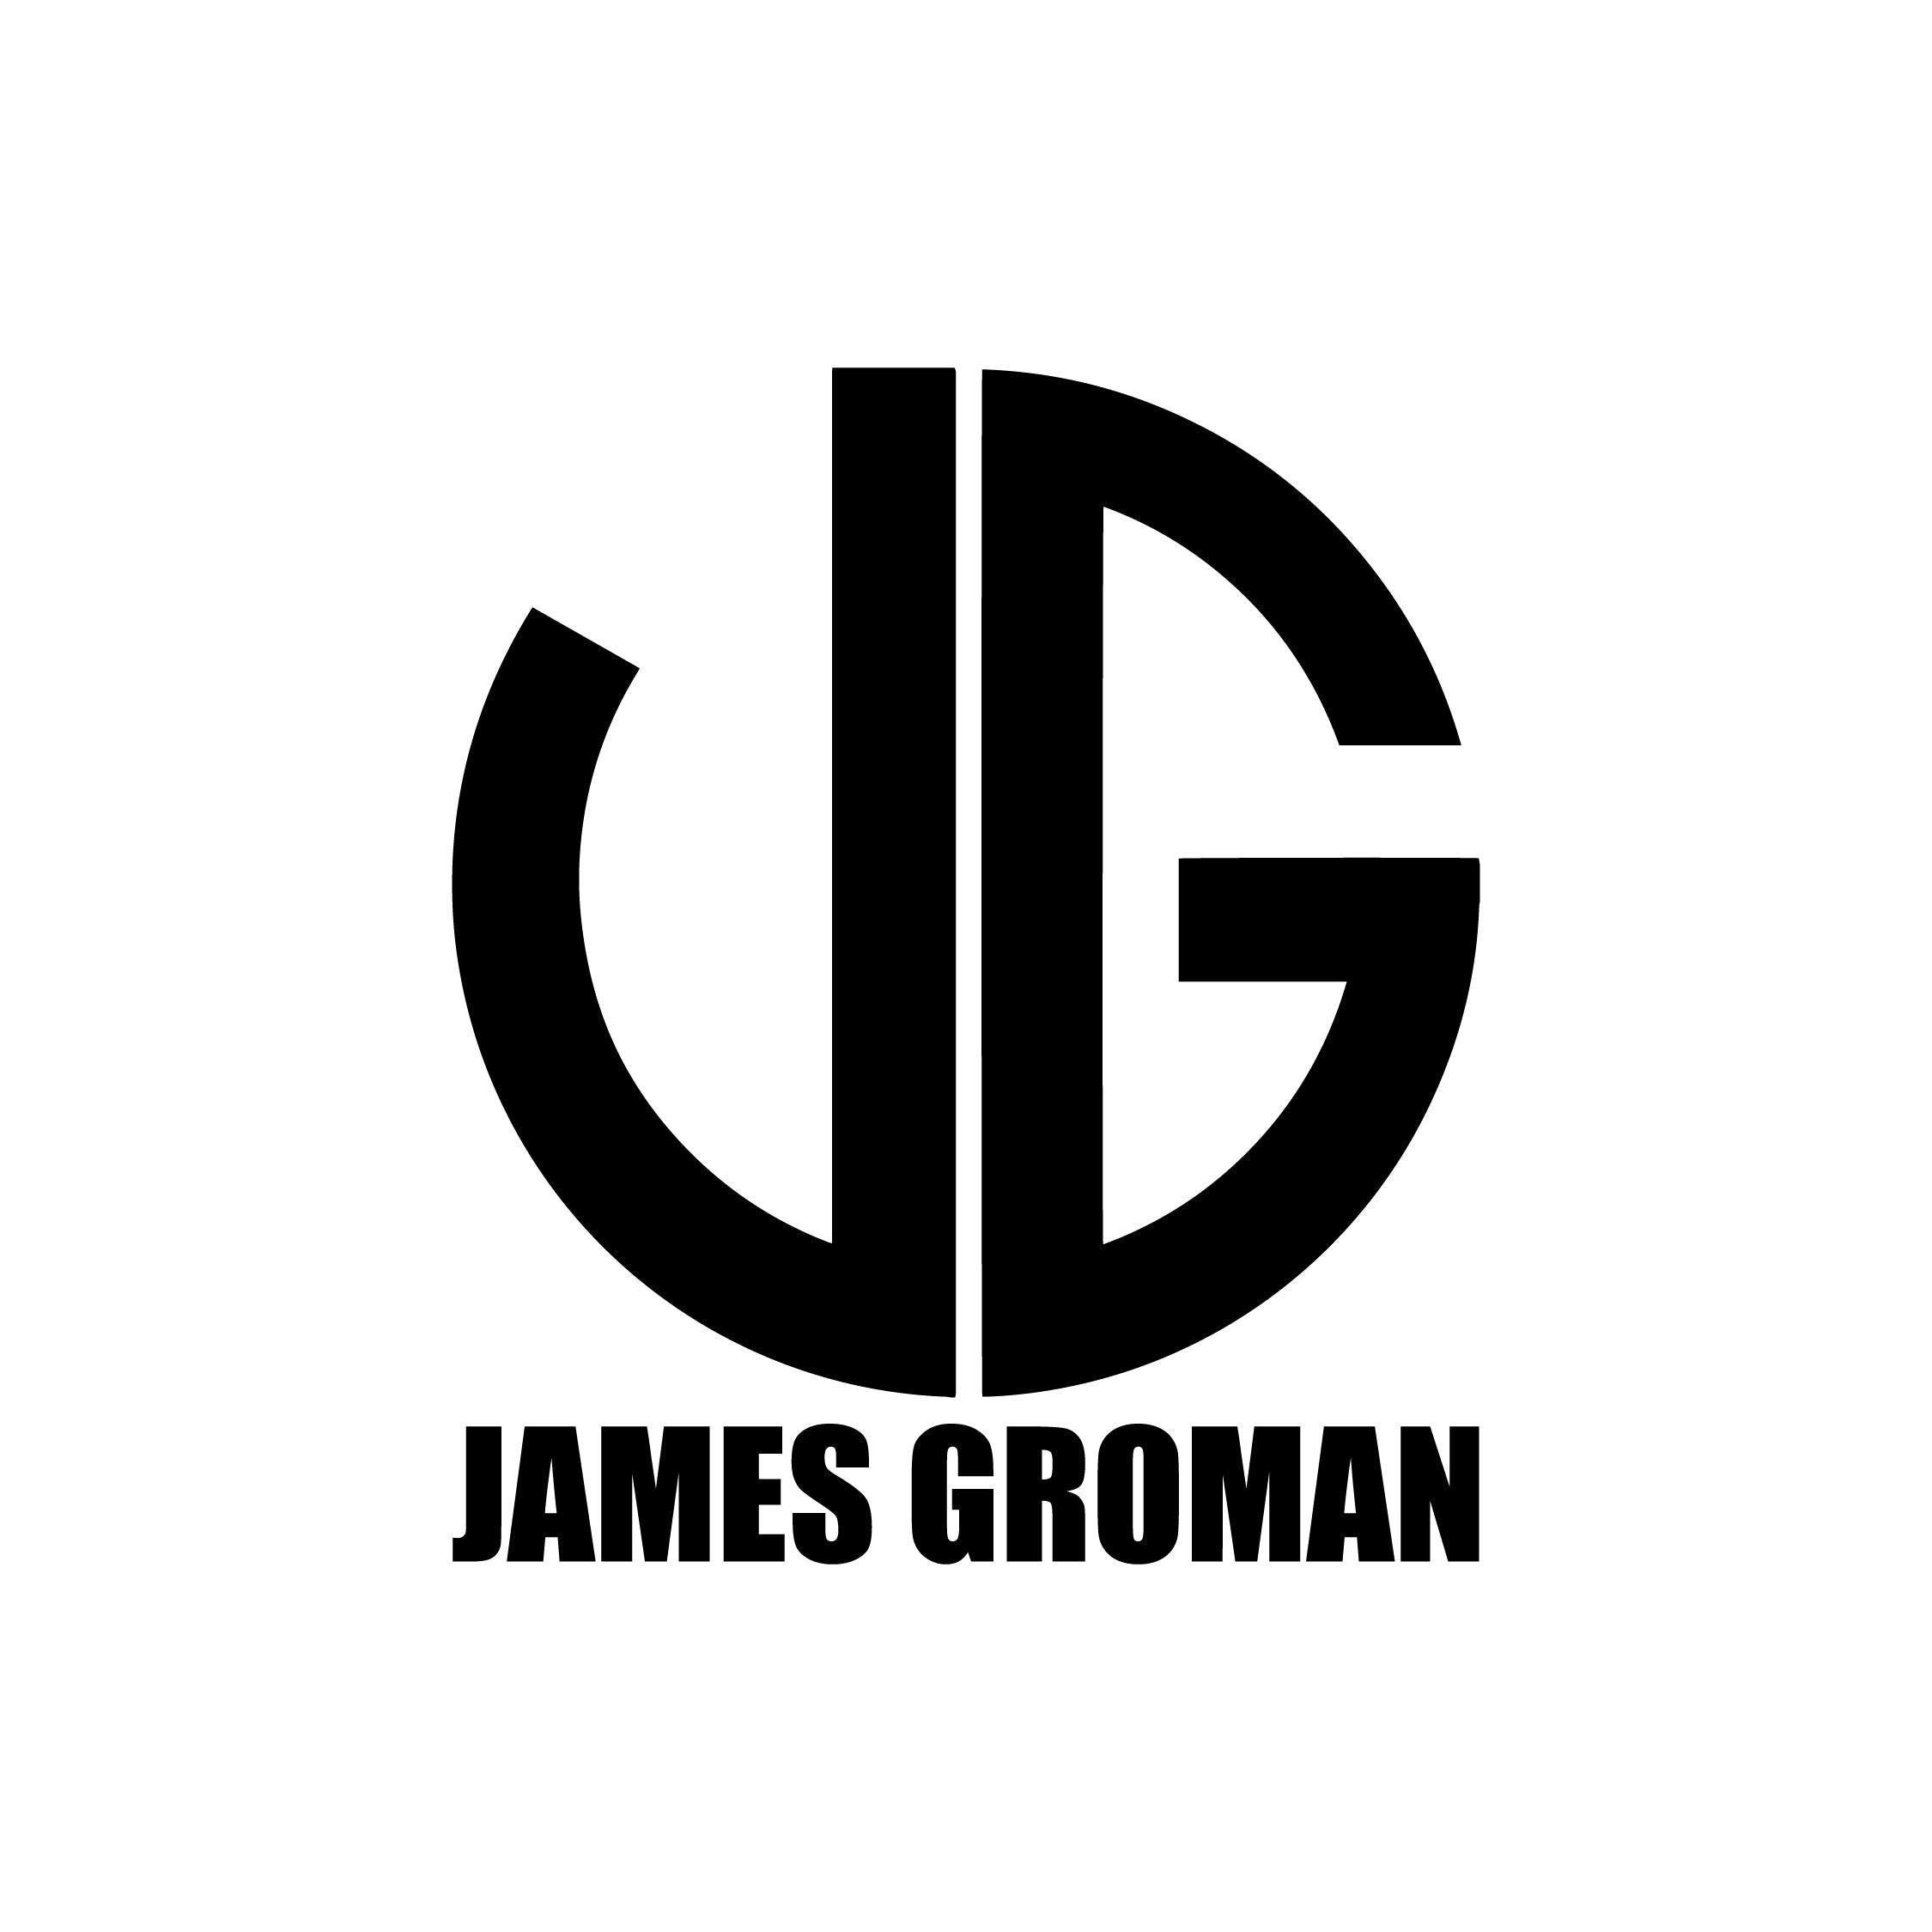 James Groman